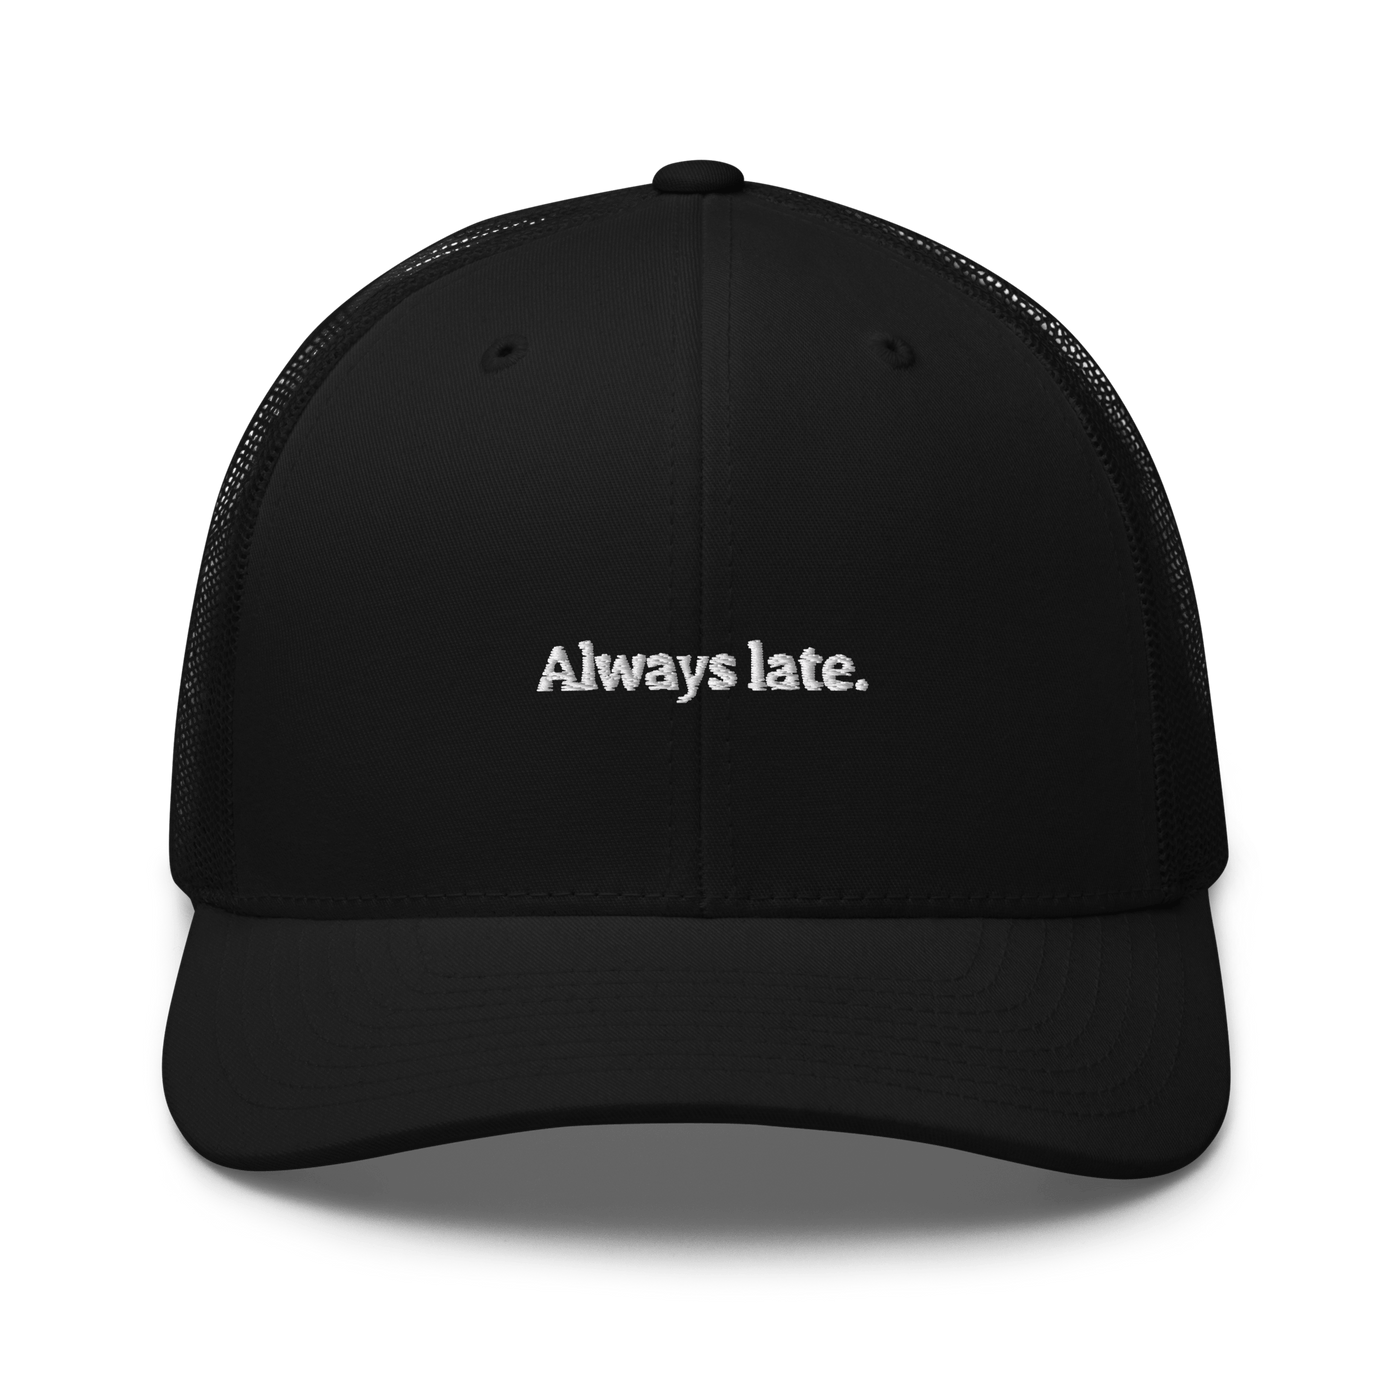 Always Late. Trucker Cap - Black - - Just Another Cap Store